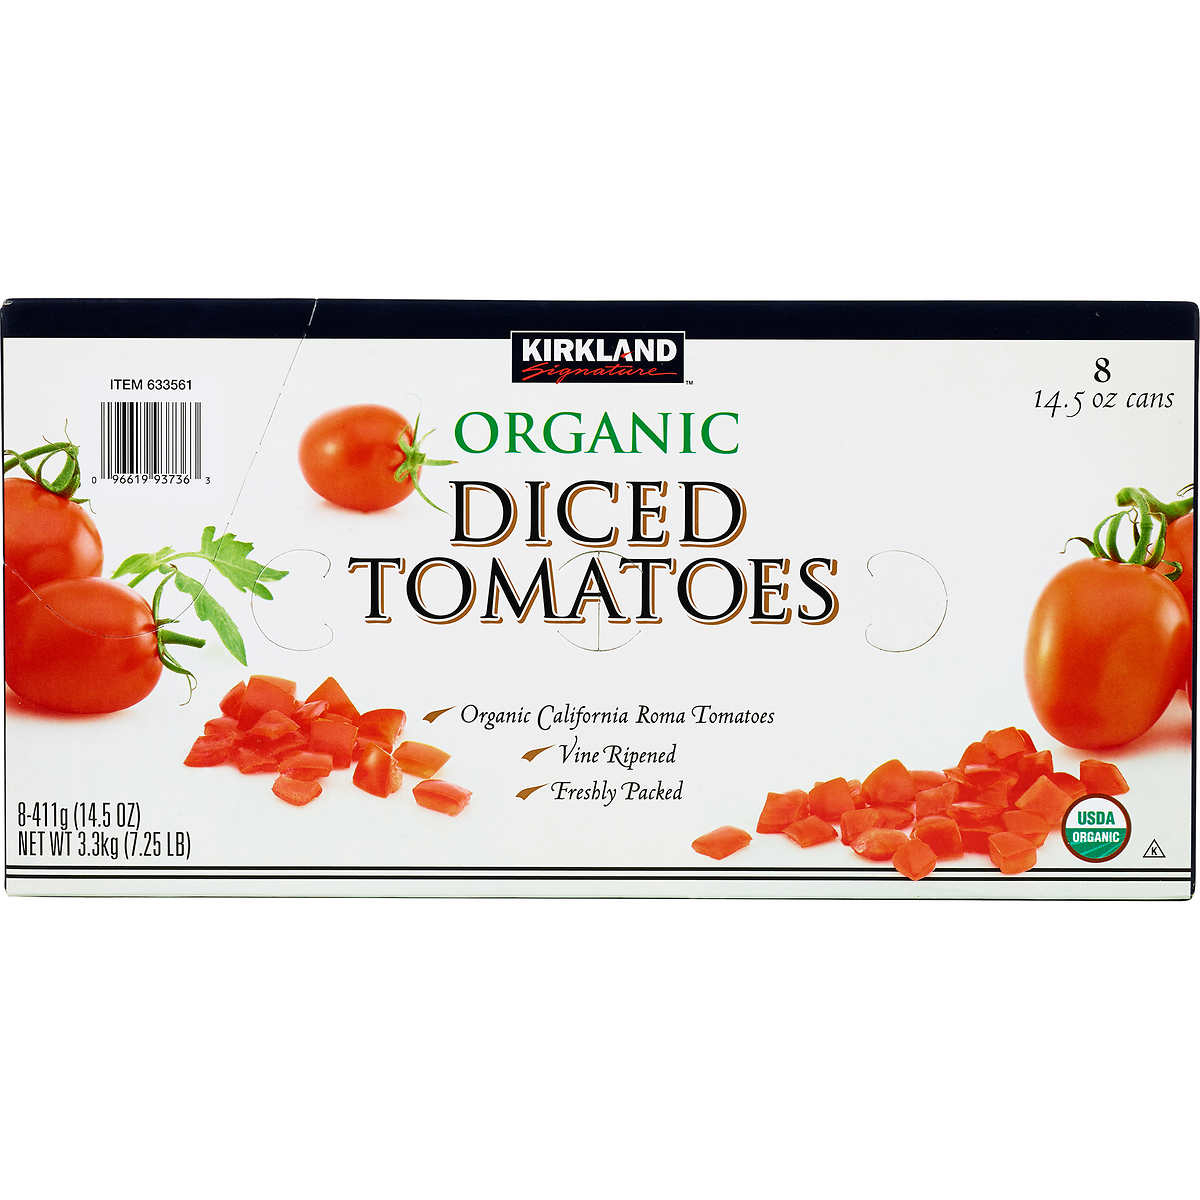 Kirkland Signature Organic Diced Tomatoes, 14.5 Oz, 8-count